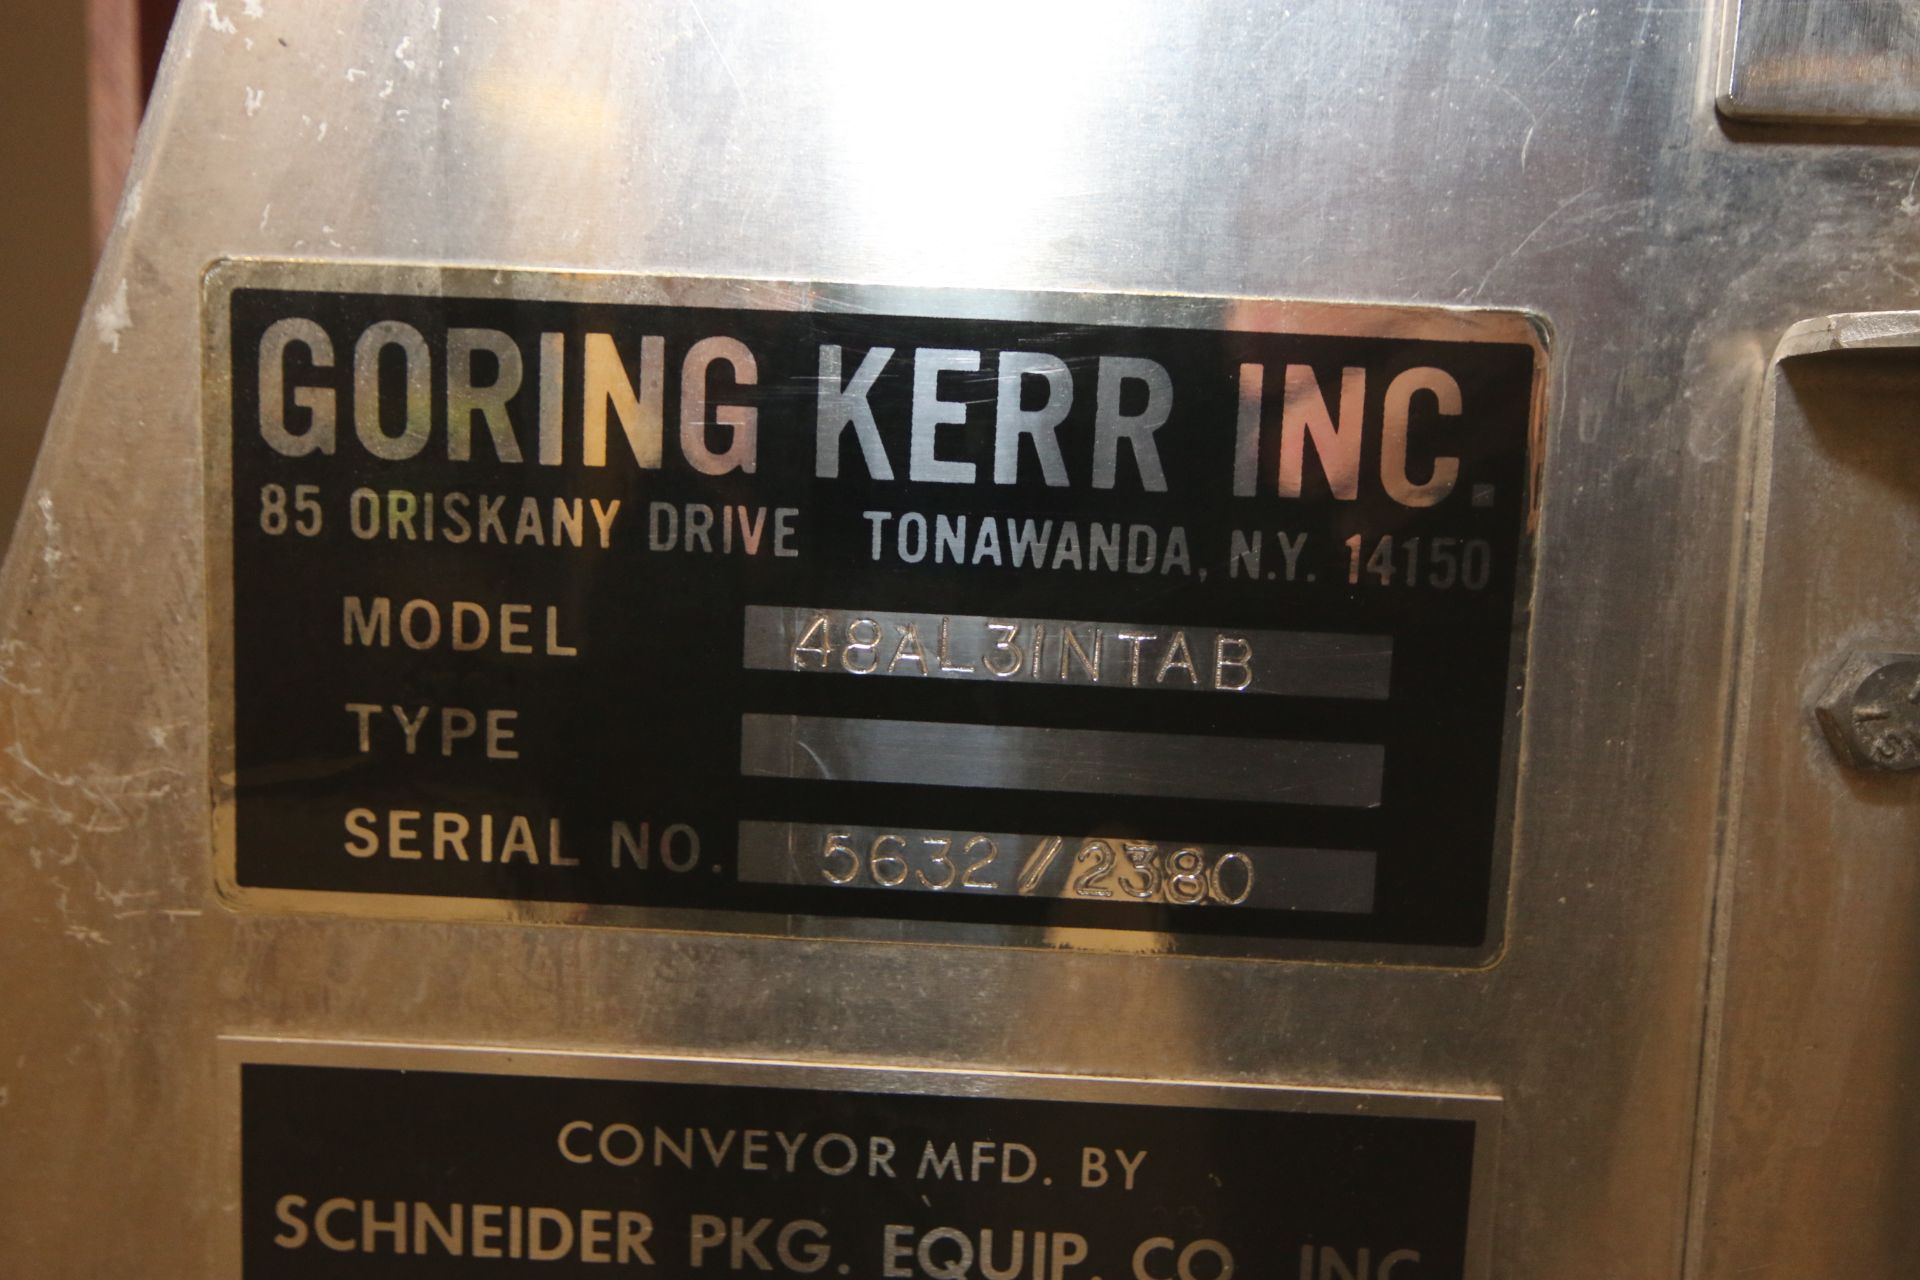 Goring Kerr Straight Section of Aluminum Conveyor, M/N 48AL3INTAB, S/N 5632/2380, Aprox. 4 ft. L x - Image 8 of 8